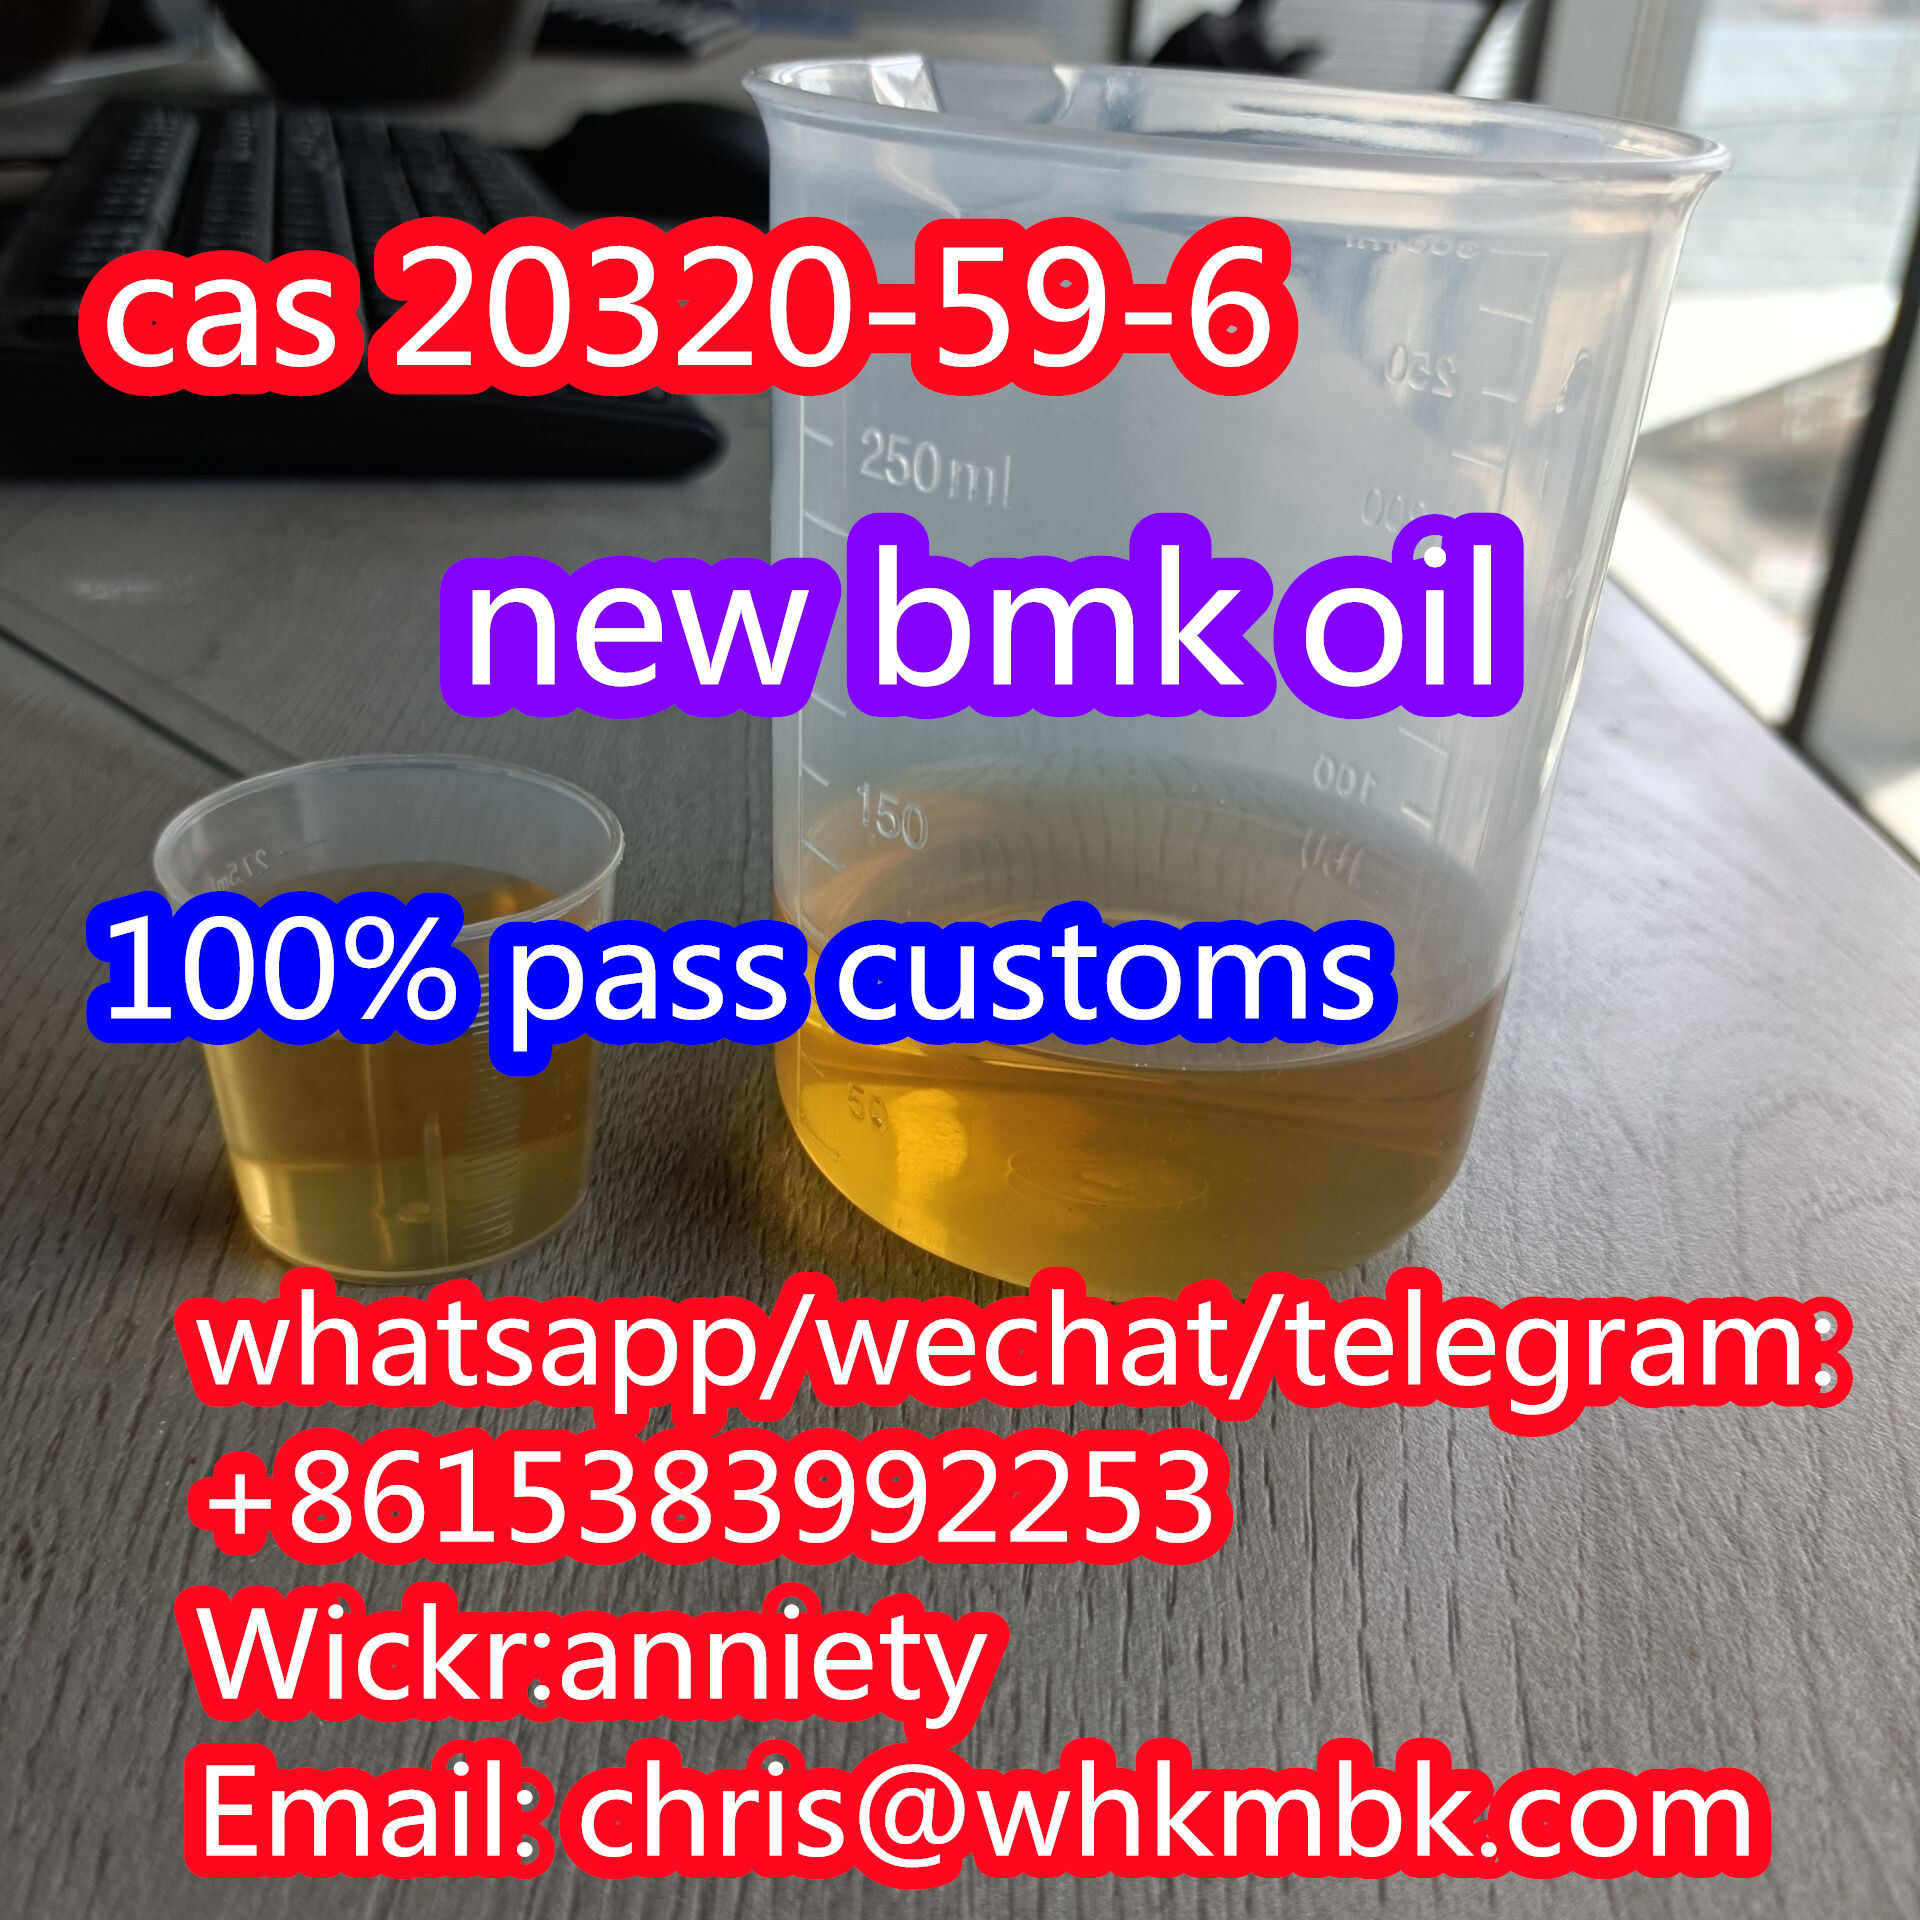 whatsapp:+86 153 8399 2253 new bmk powder/oil cas 20320-59-6 รูปที่ 1